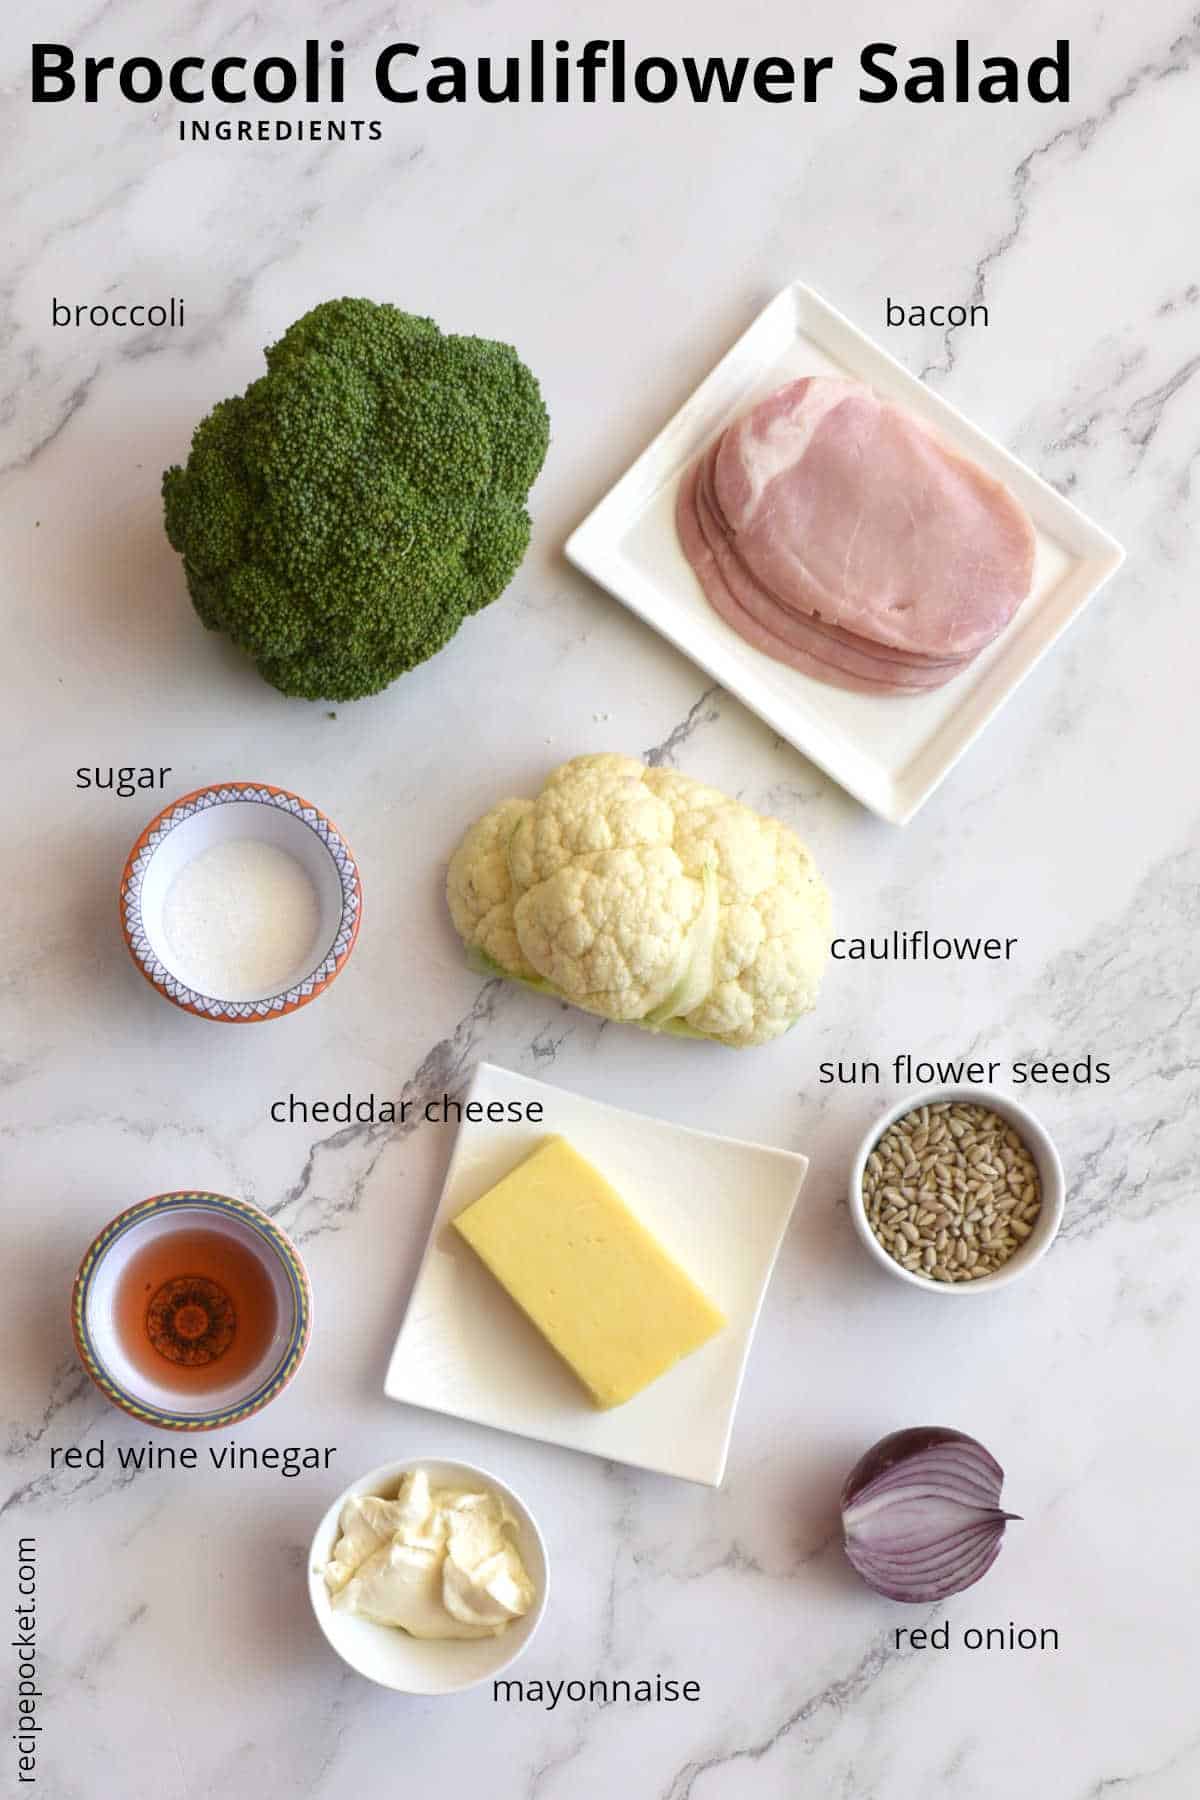 Photo of ingredients to make broccoli and cauliflower salad.